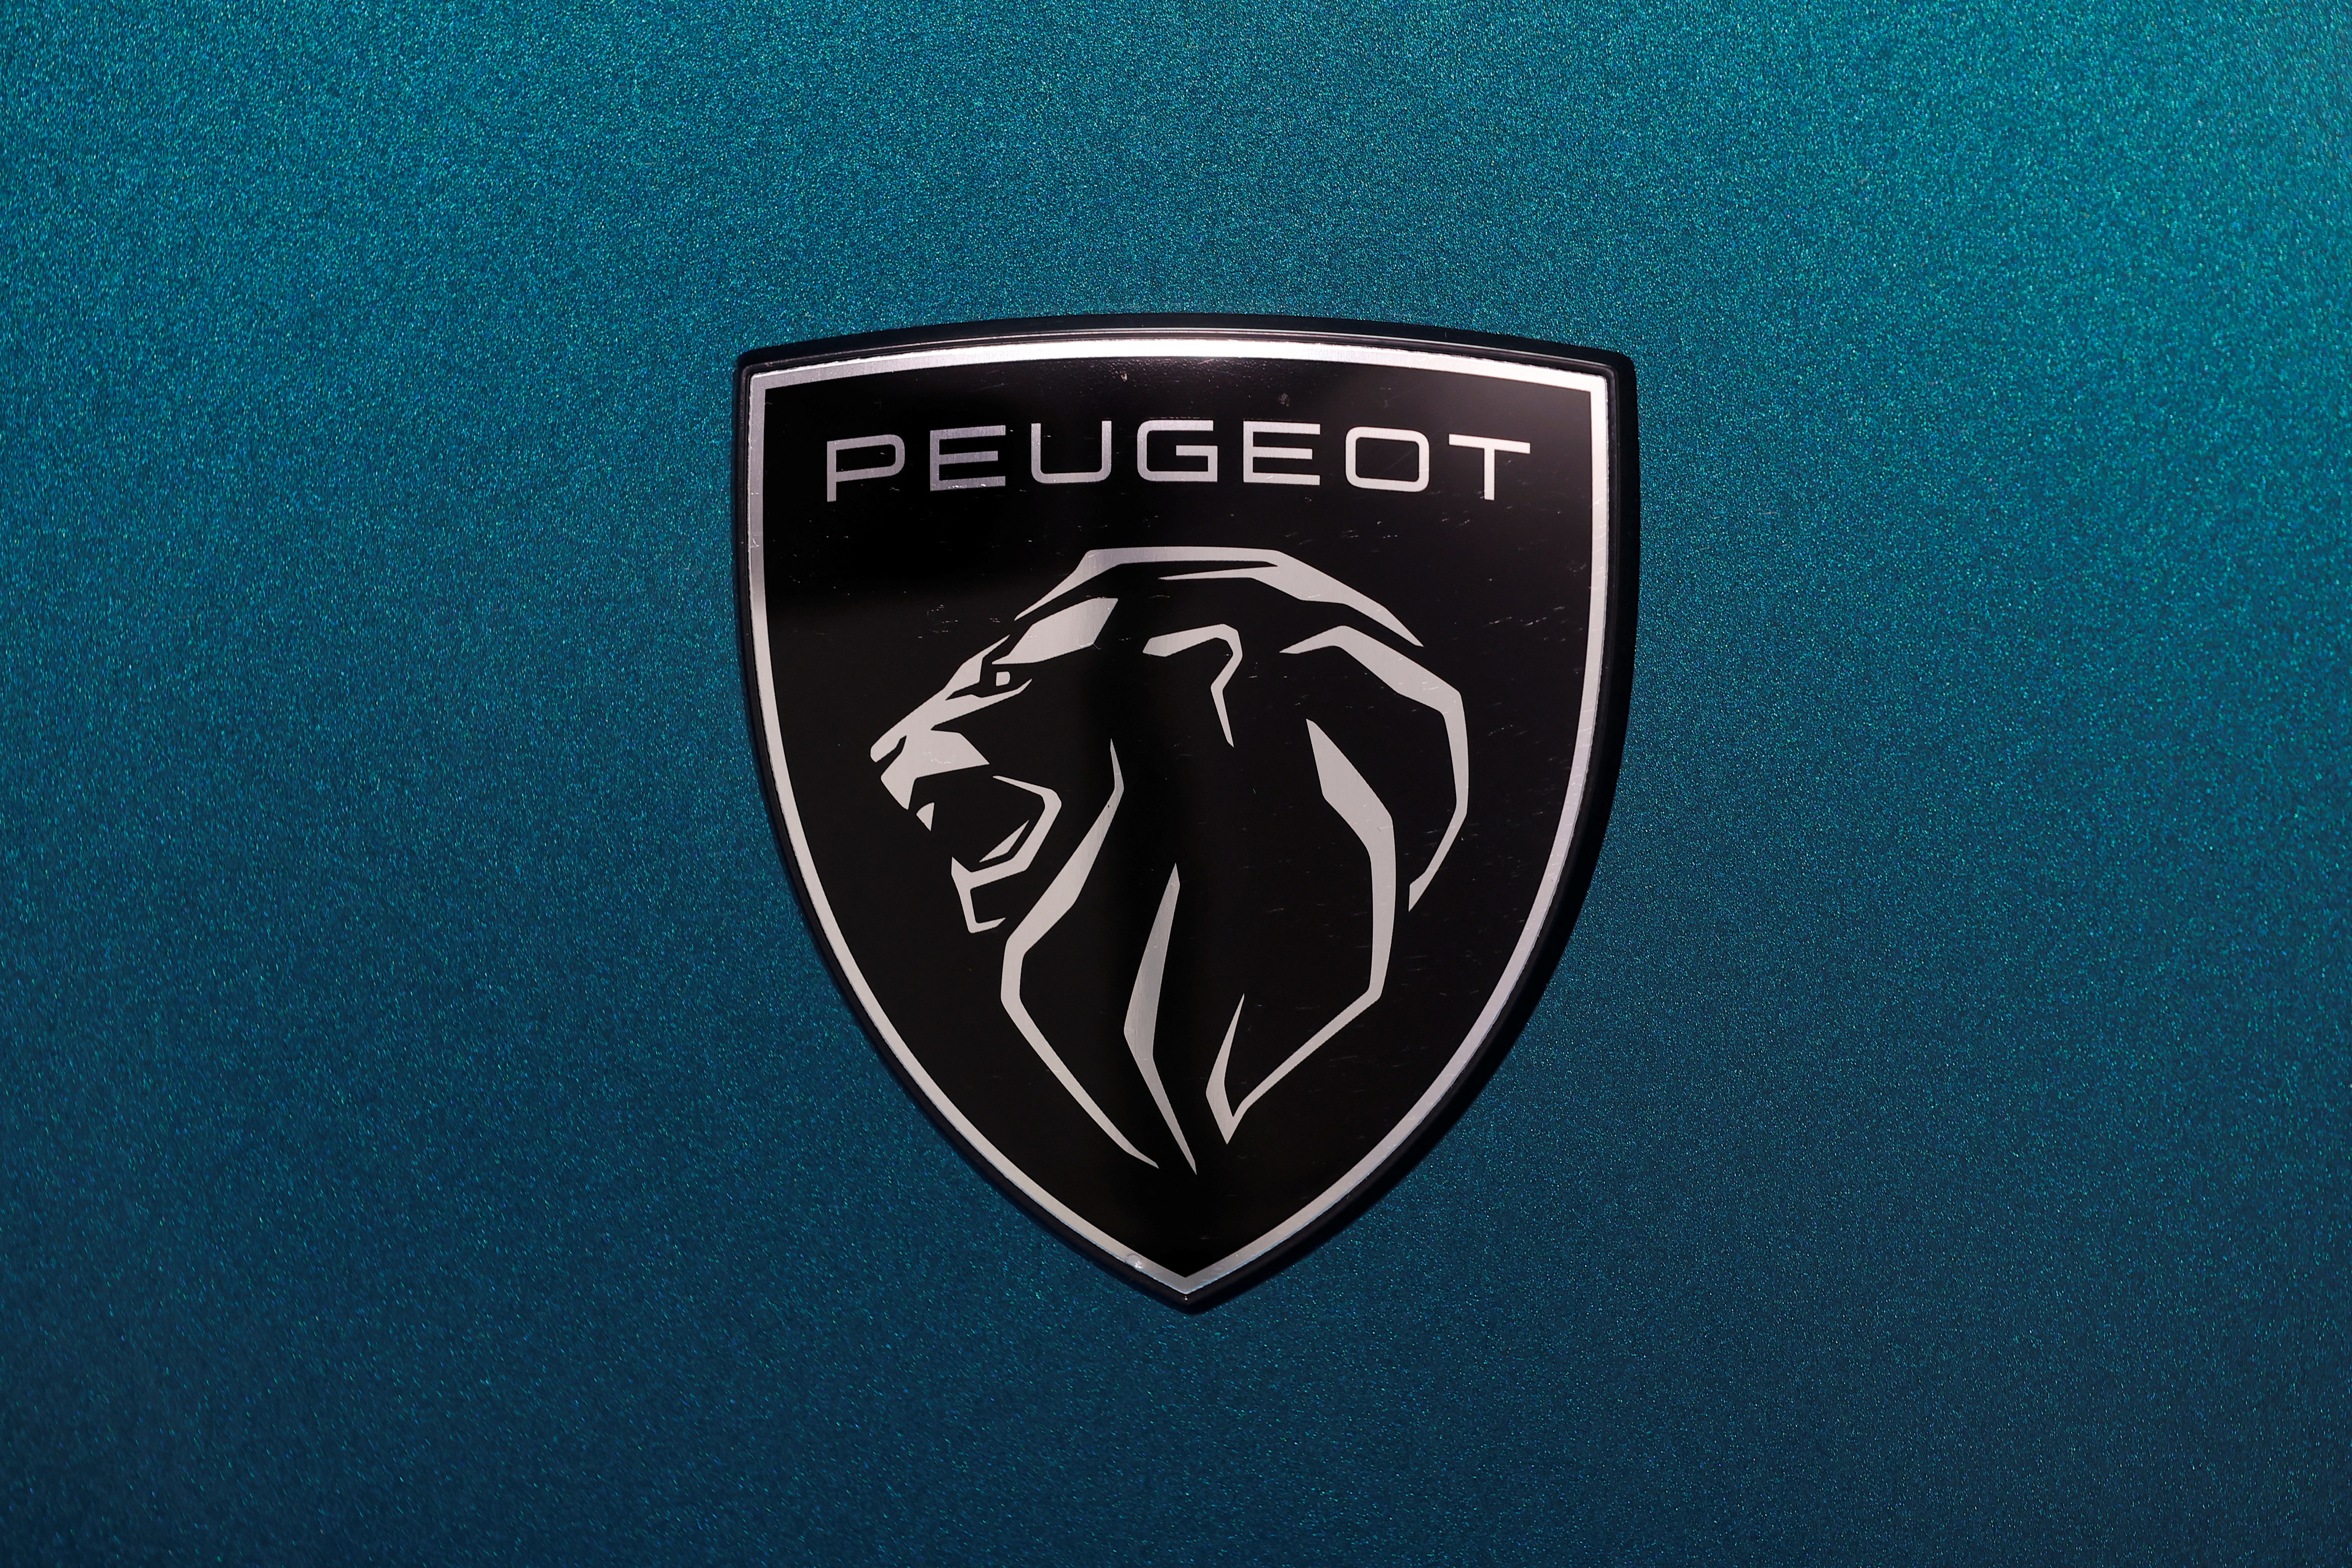 Peugeot 3008 will offer 3 EV drivetrains